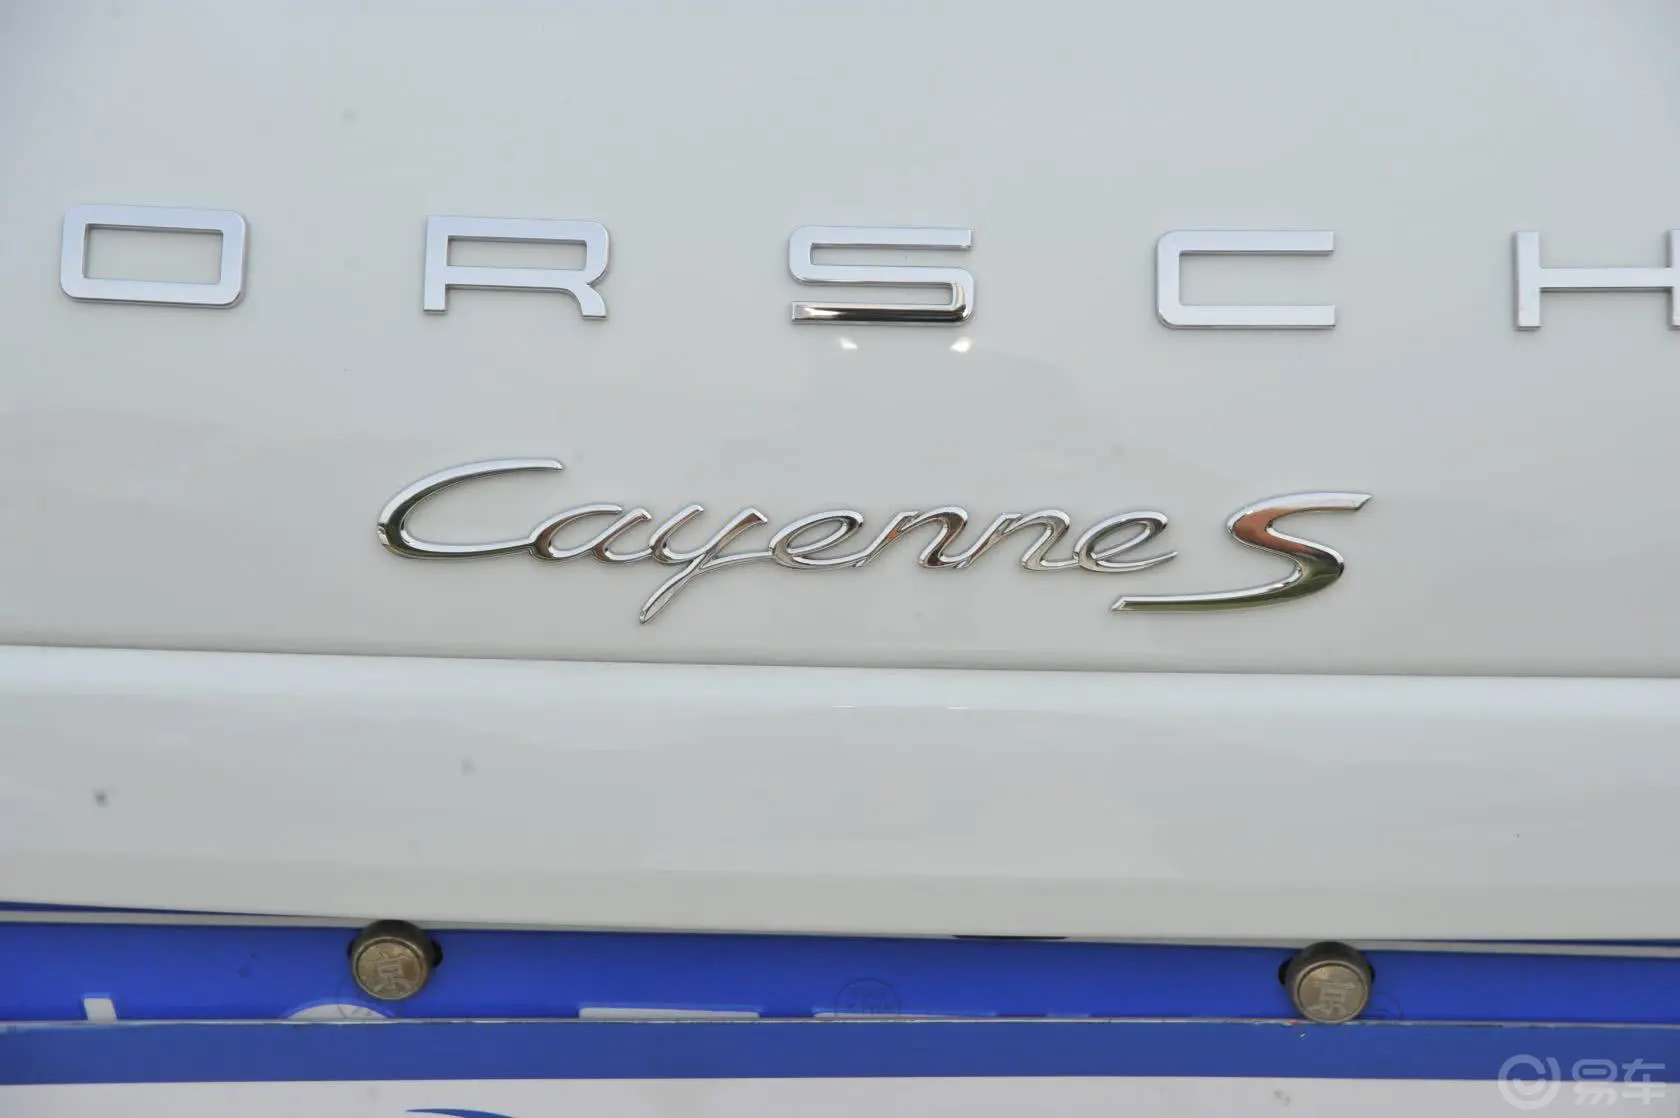 CayenneCayenne S 4.8L尾标